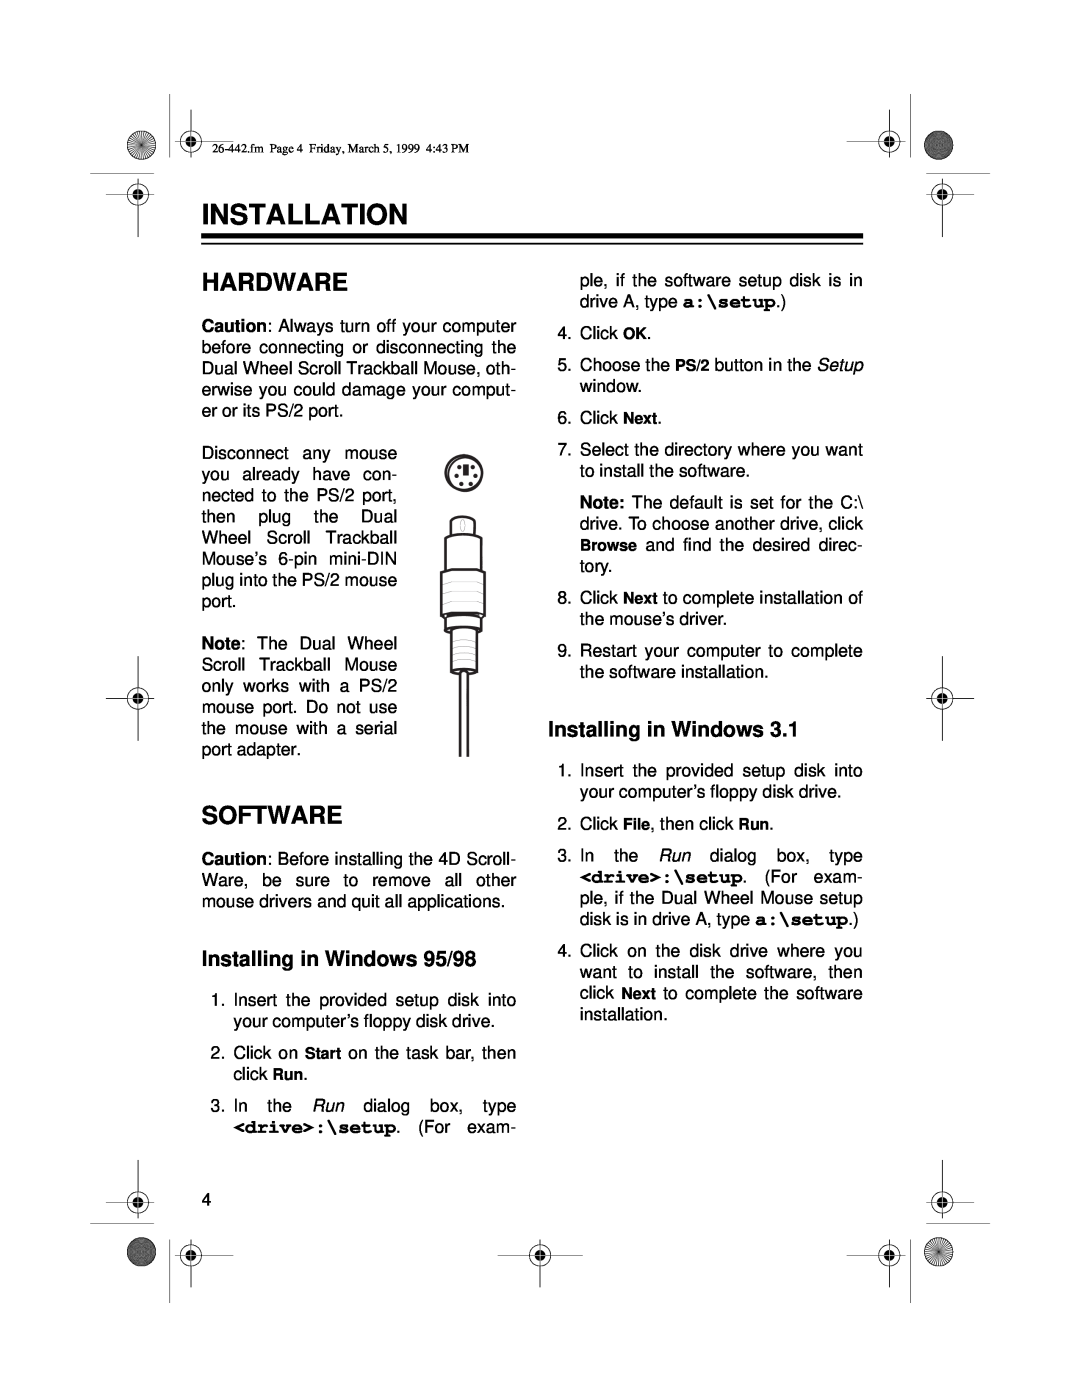 Radio Shack 26-442 owner manual Installation, Hardware, Software, Installing in Windows 95/98, drive\setup. For exam 